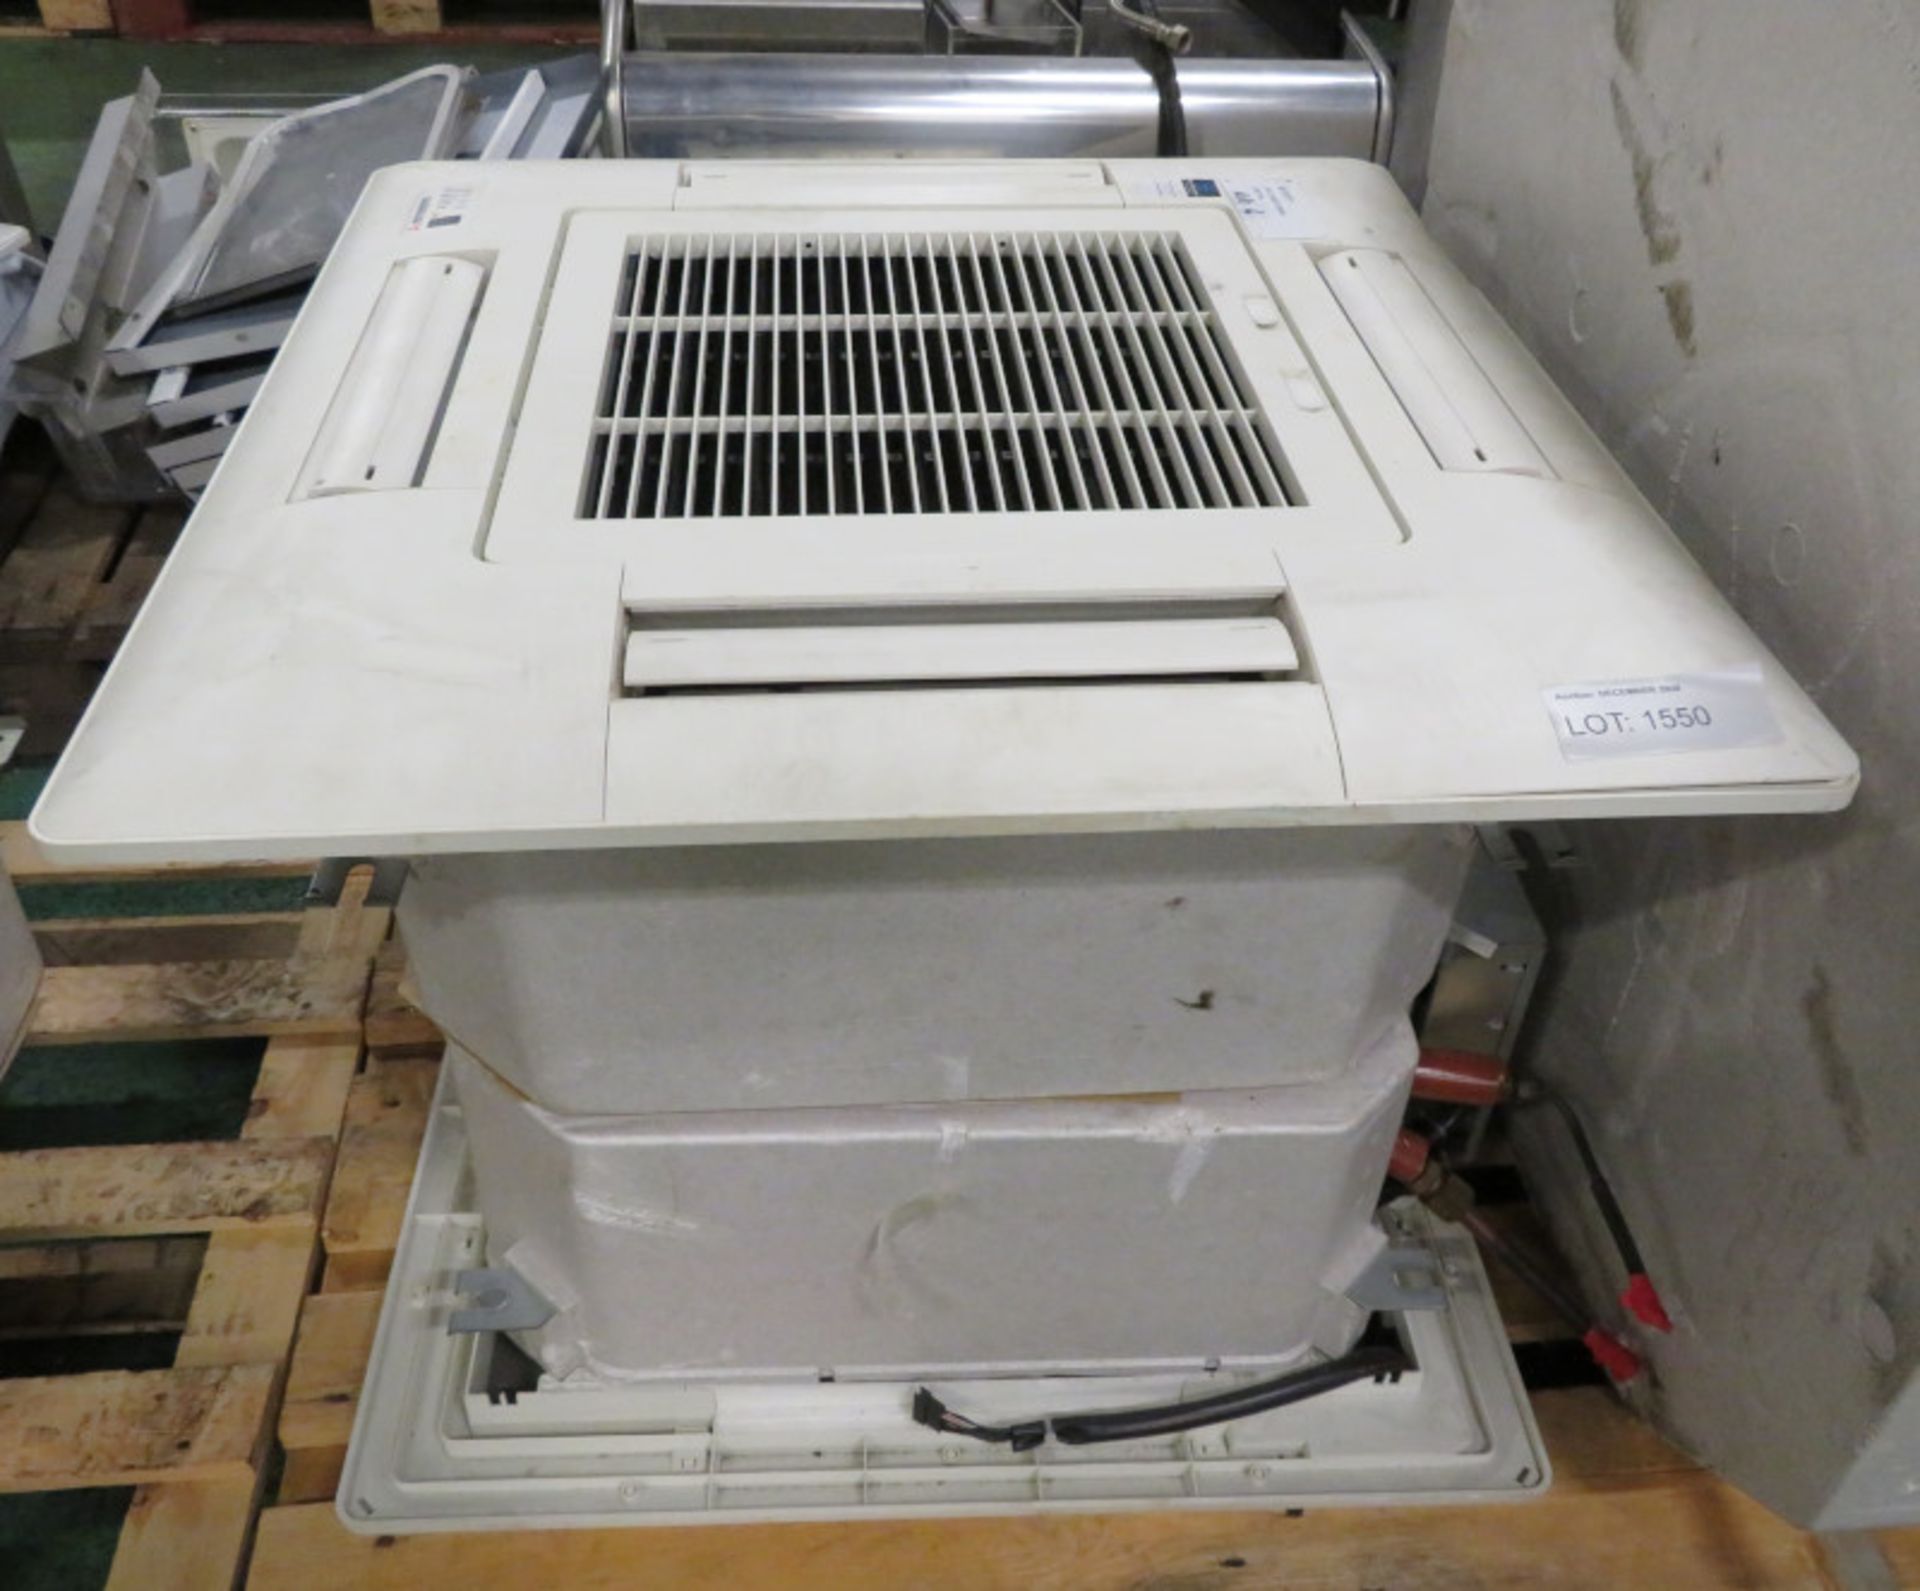 2x Mitsubishi Daiya FDTCA201 5.0kw Ceiling Casette air conditioning units & Mitsubishi FDT - Image 2 of 8